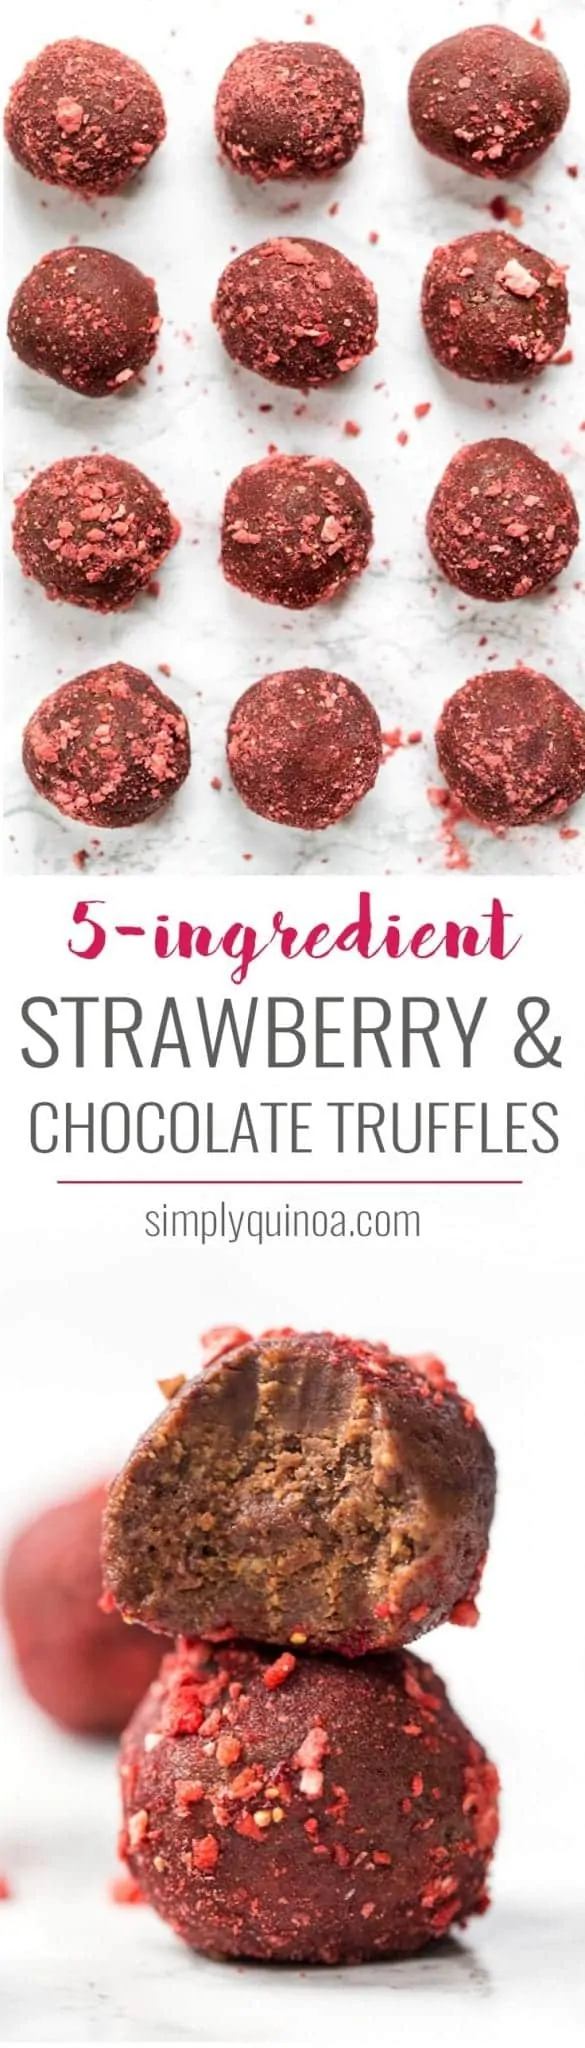 vegan chocolate truffles made with 5 ingredients